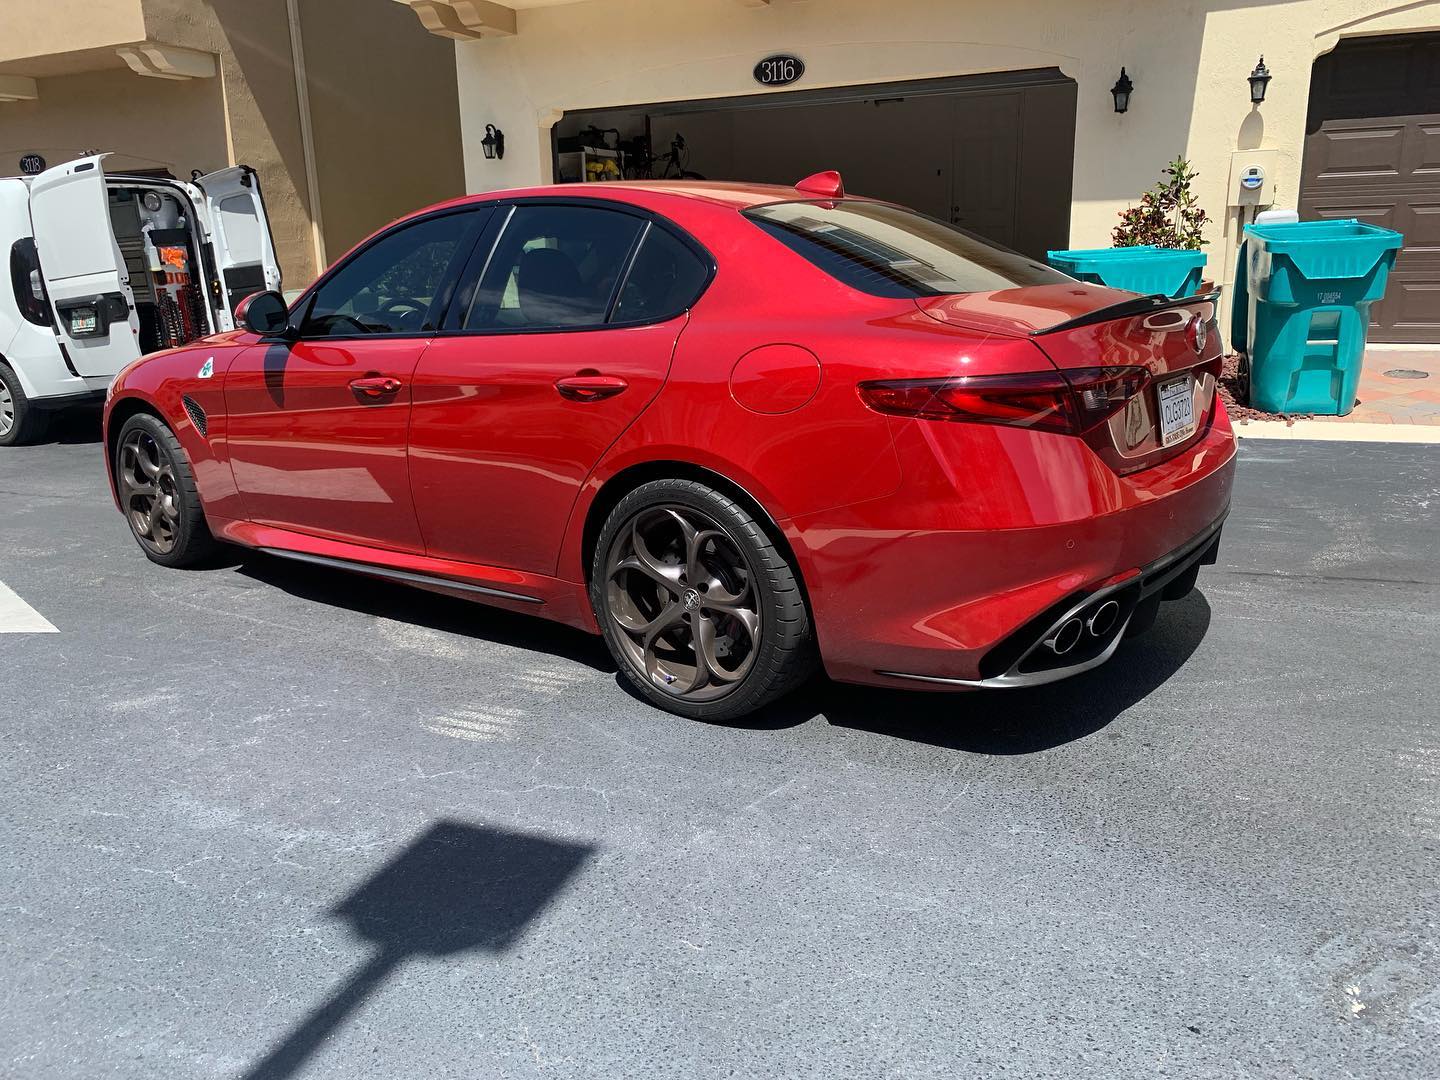 Custom K40 Police Laser Jammers and Hidden Radar Receiver Side Installed on New 2019 Alfa Romeo Romeo Giulia Quadrifoglio in Boca Raton, FL